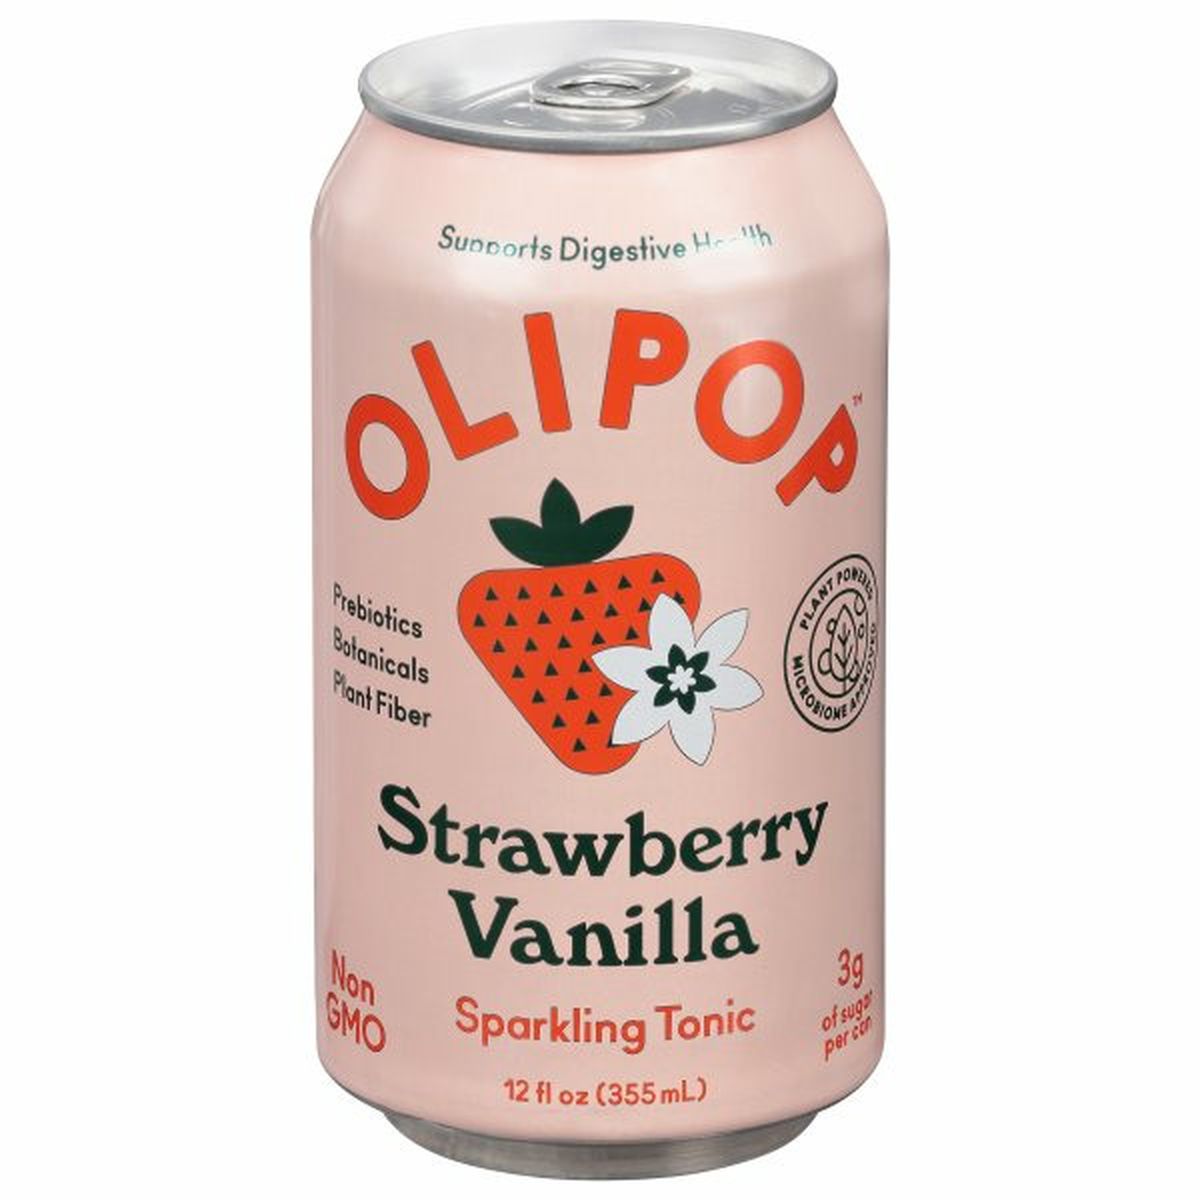 Calories in Olipop Sparkling Tonic, Strawberry Vanilla